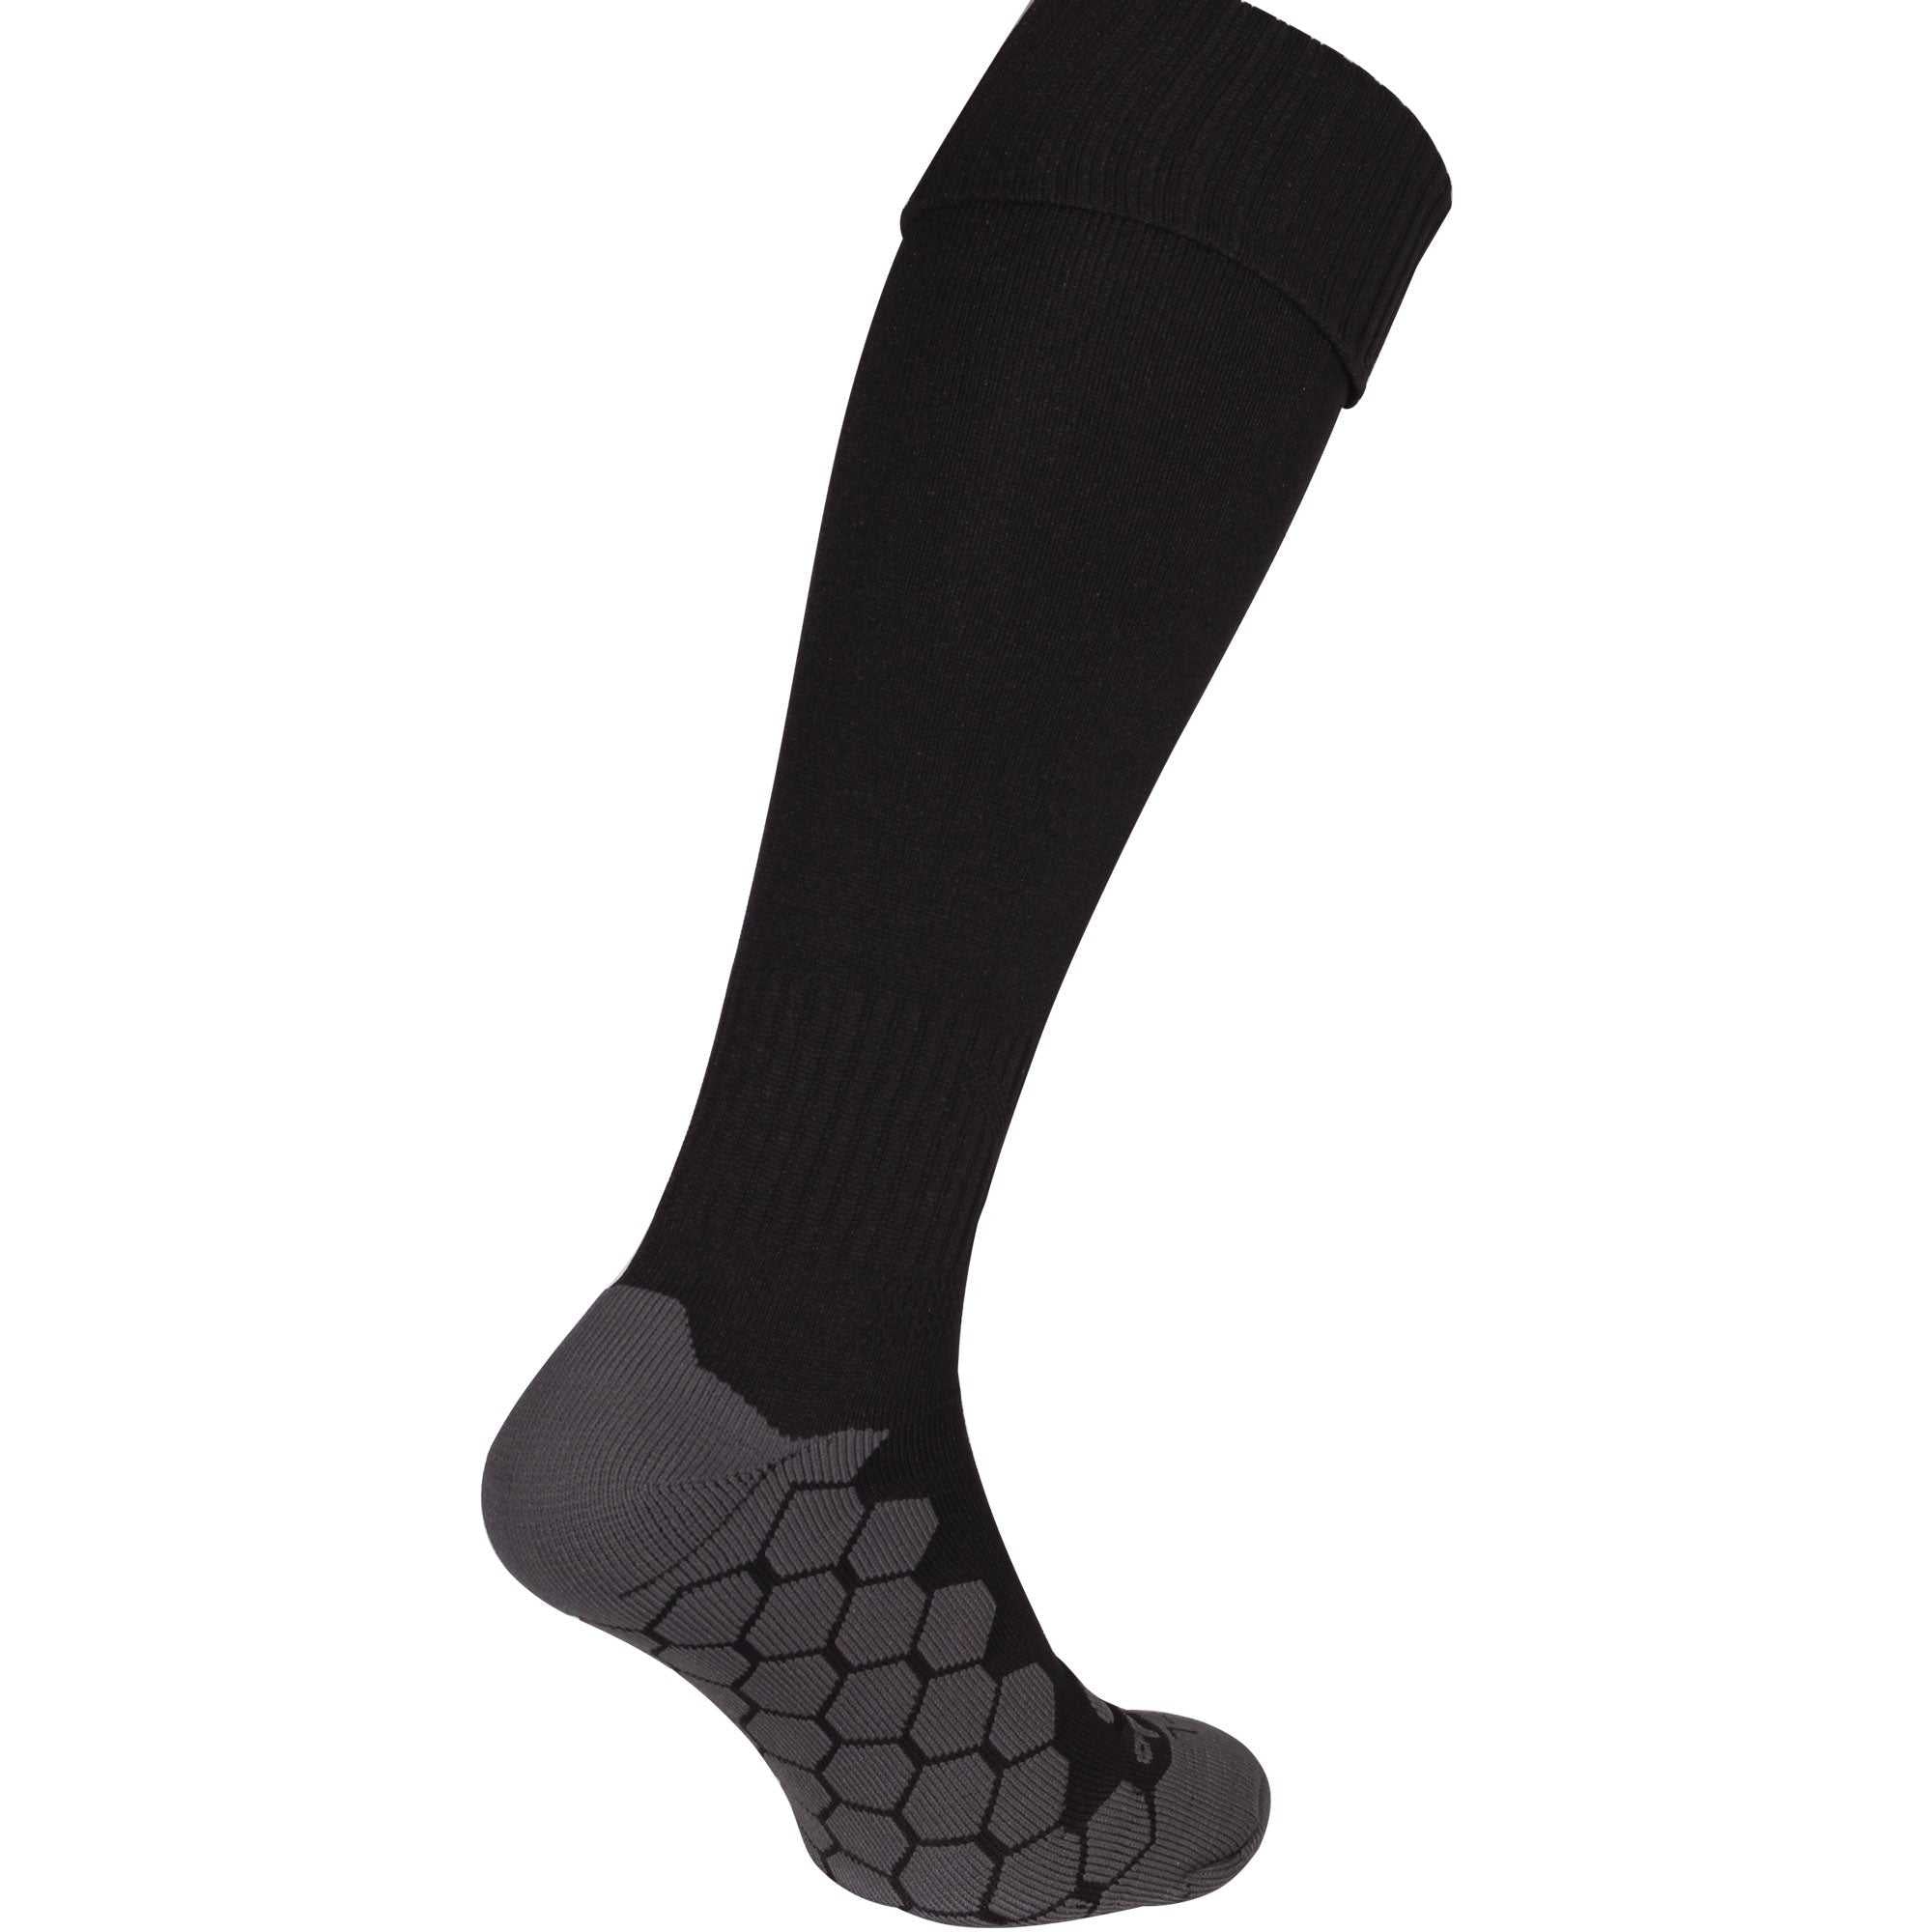 Wheatley Hills R.U.F.C Black Socks - Optimum